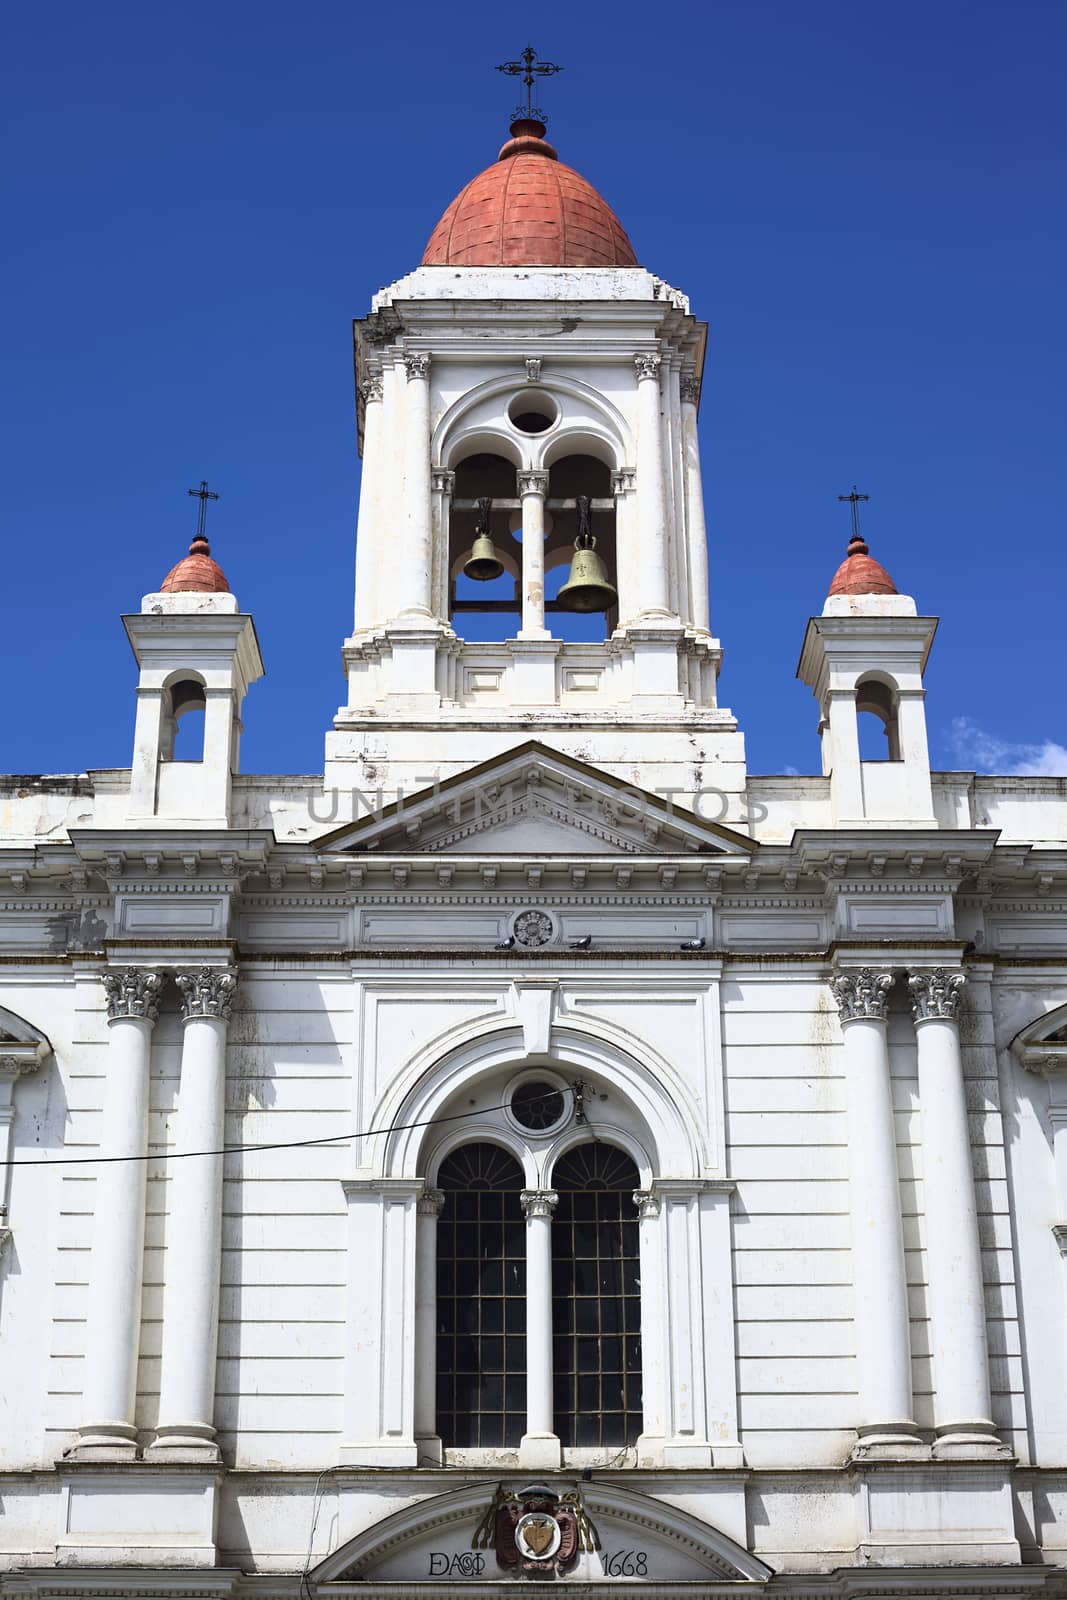 LA PAZ, BOLIVIA - OCTOBER 11, 2014: The bell tower of the church El Sagrario (sanctuary) de San Augustin on Mercado street in the city center on October 11, 2014 in La Paz, Bolivia 